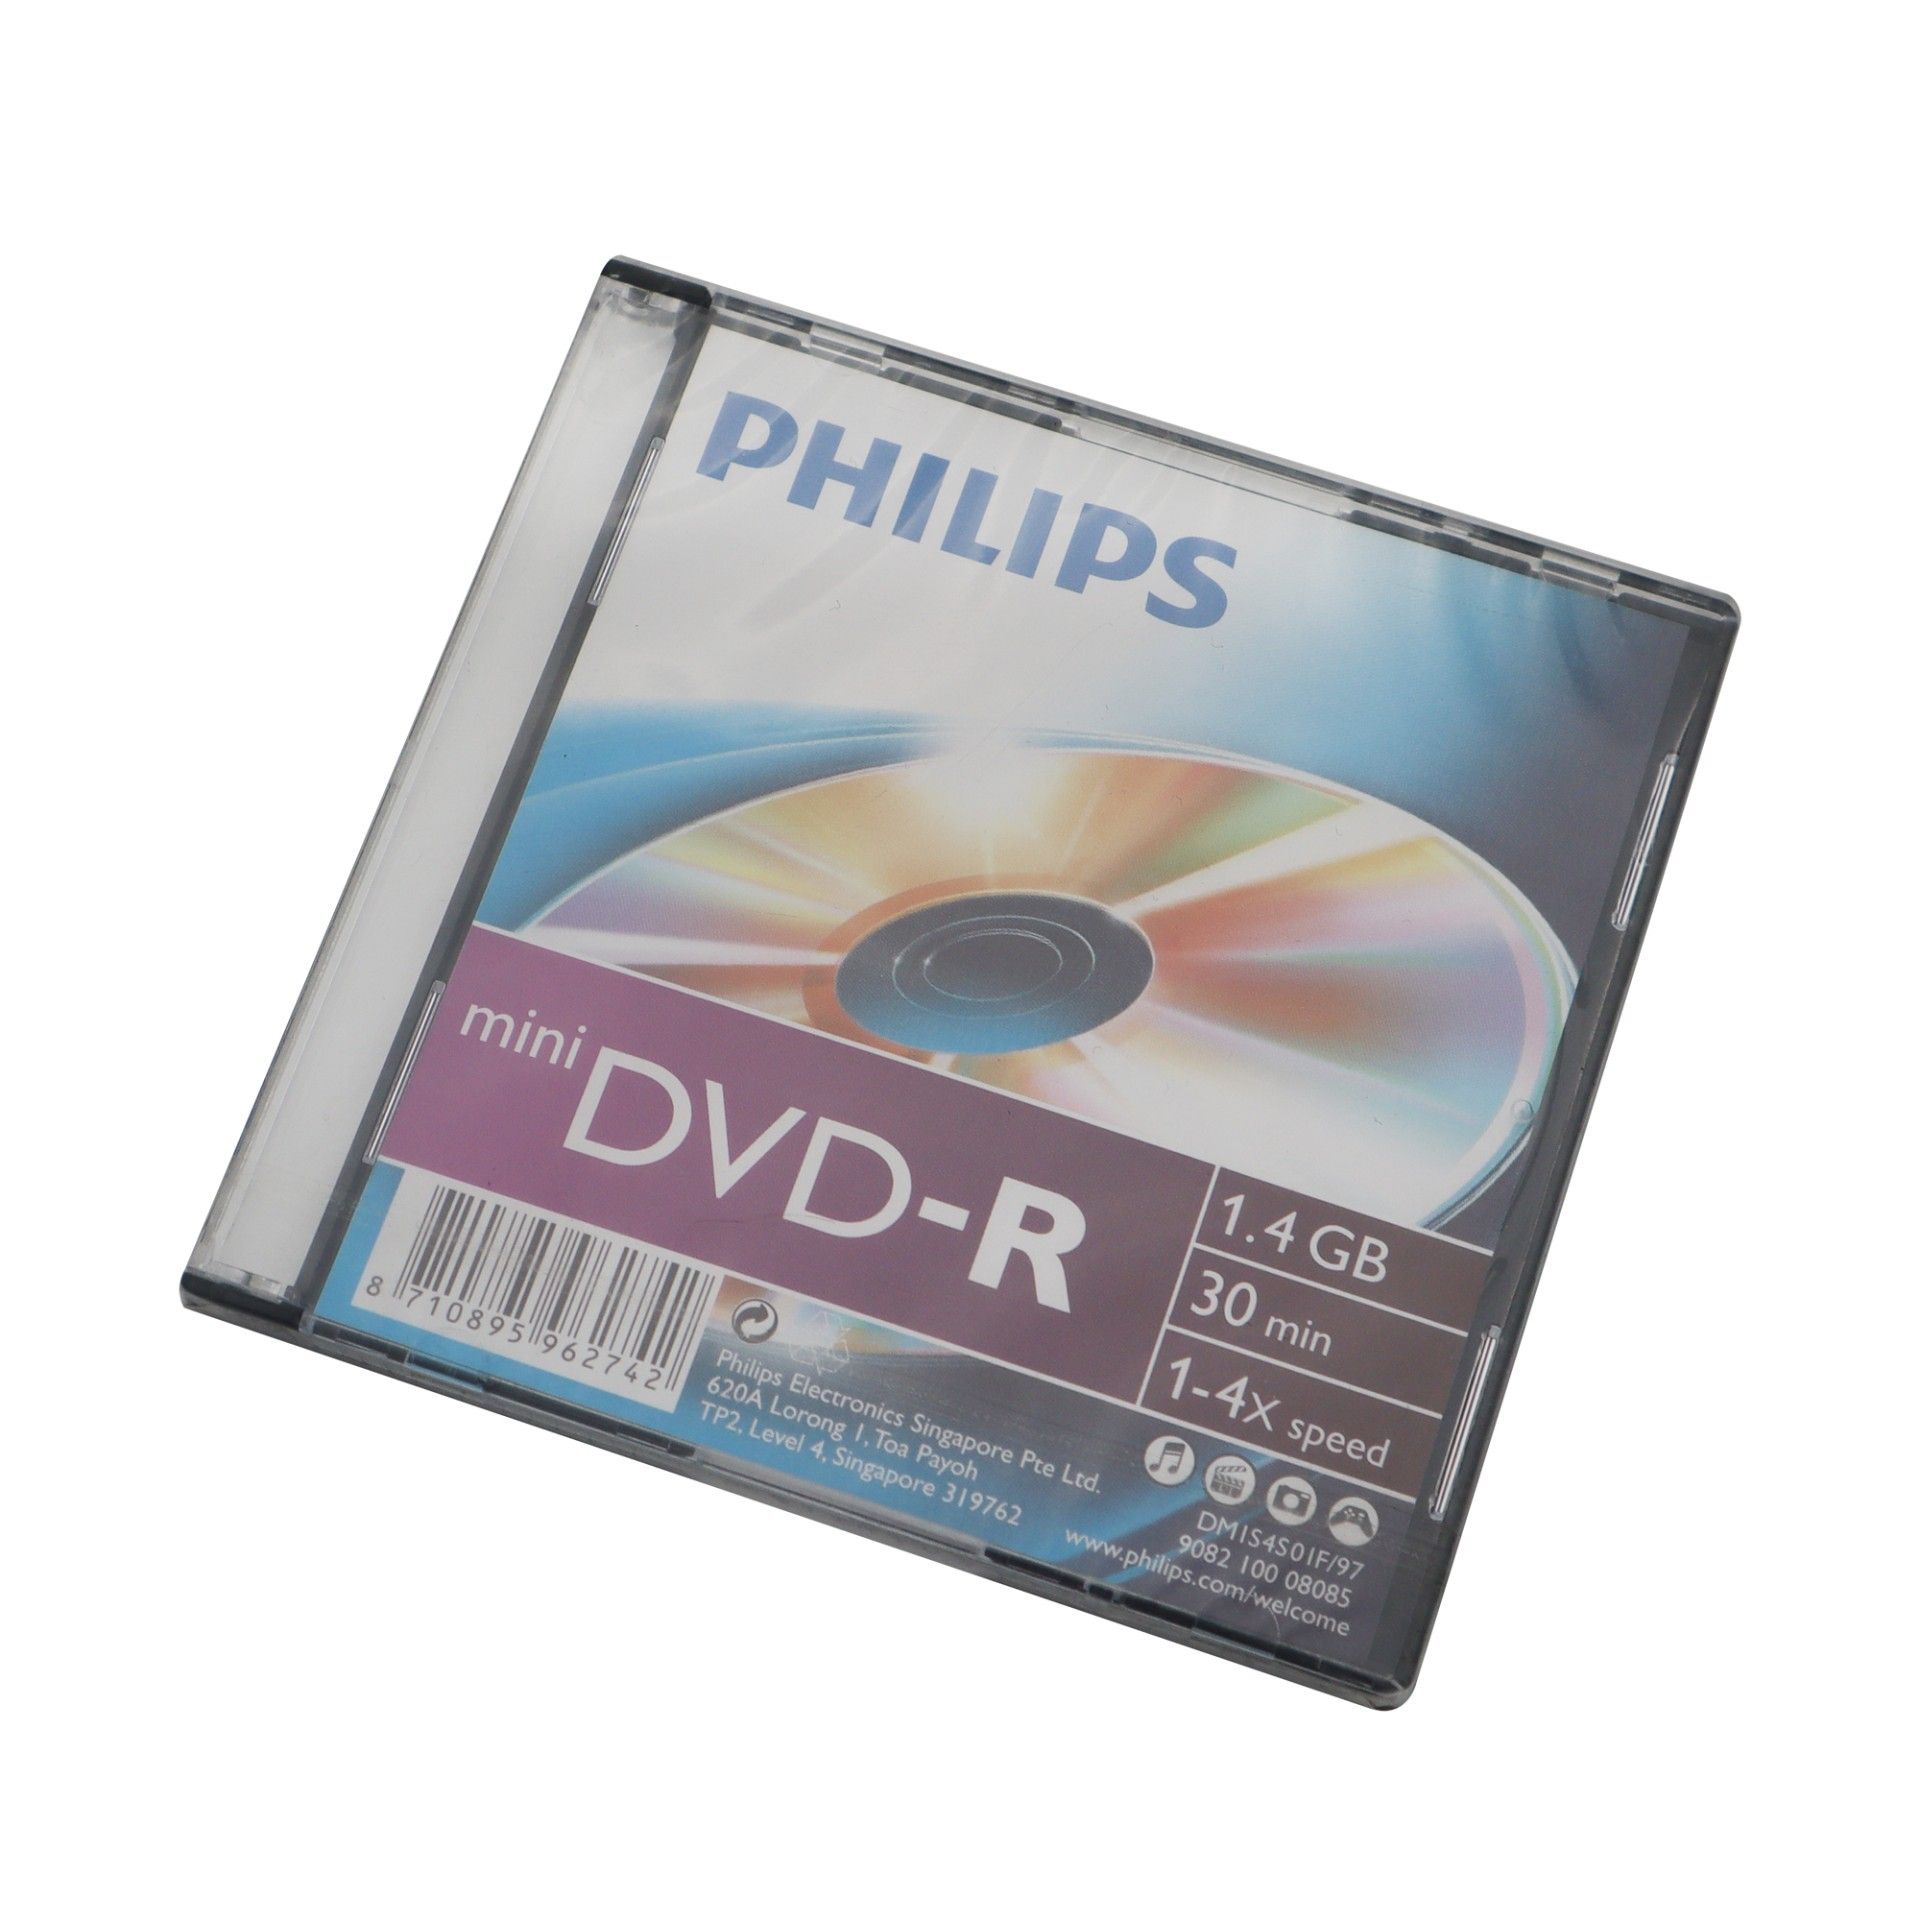 Philips 1.4 Gb Mini DVD-RW Disk